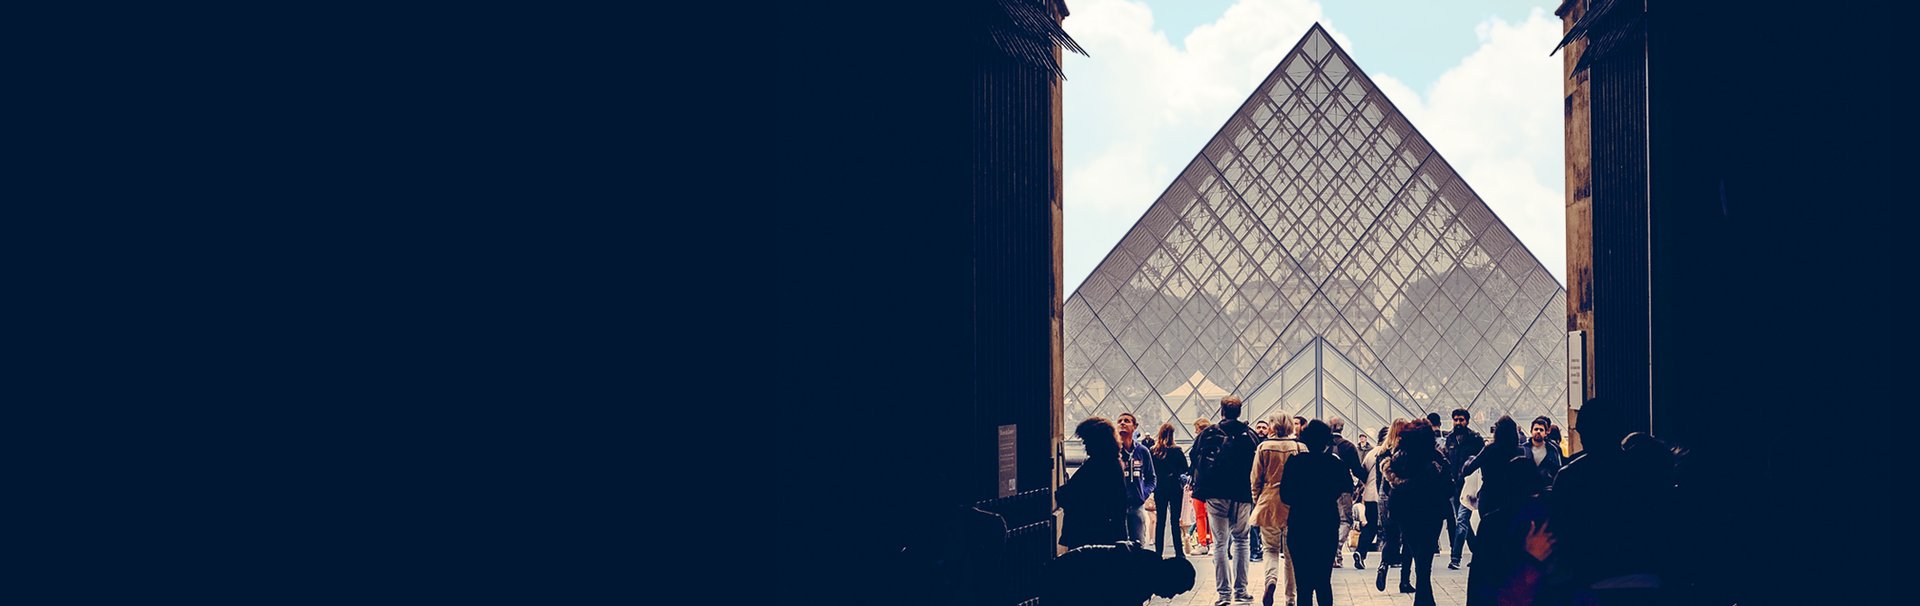 Louvre_2120x670